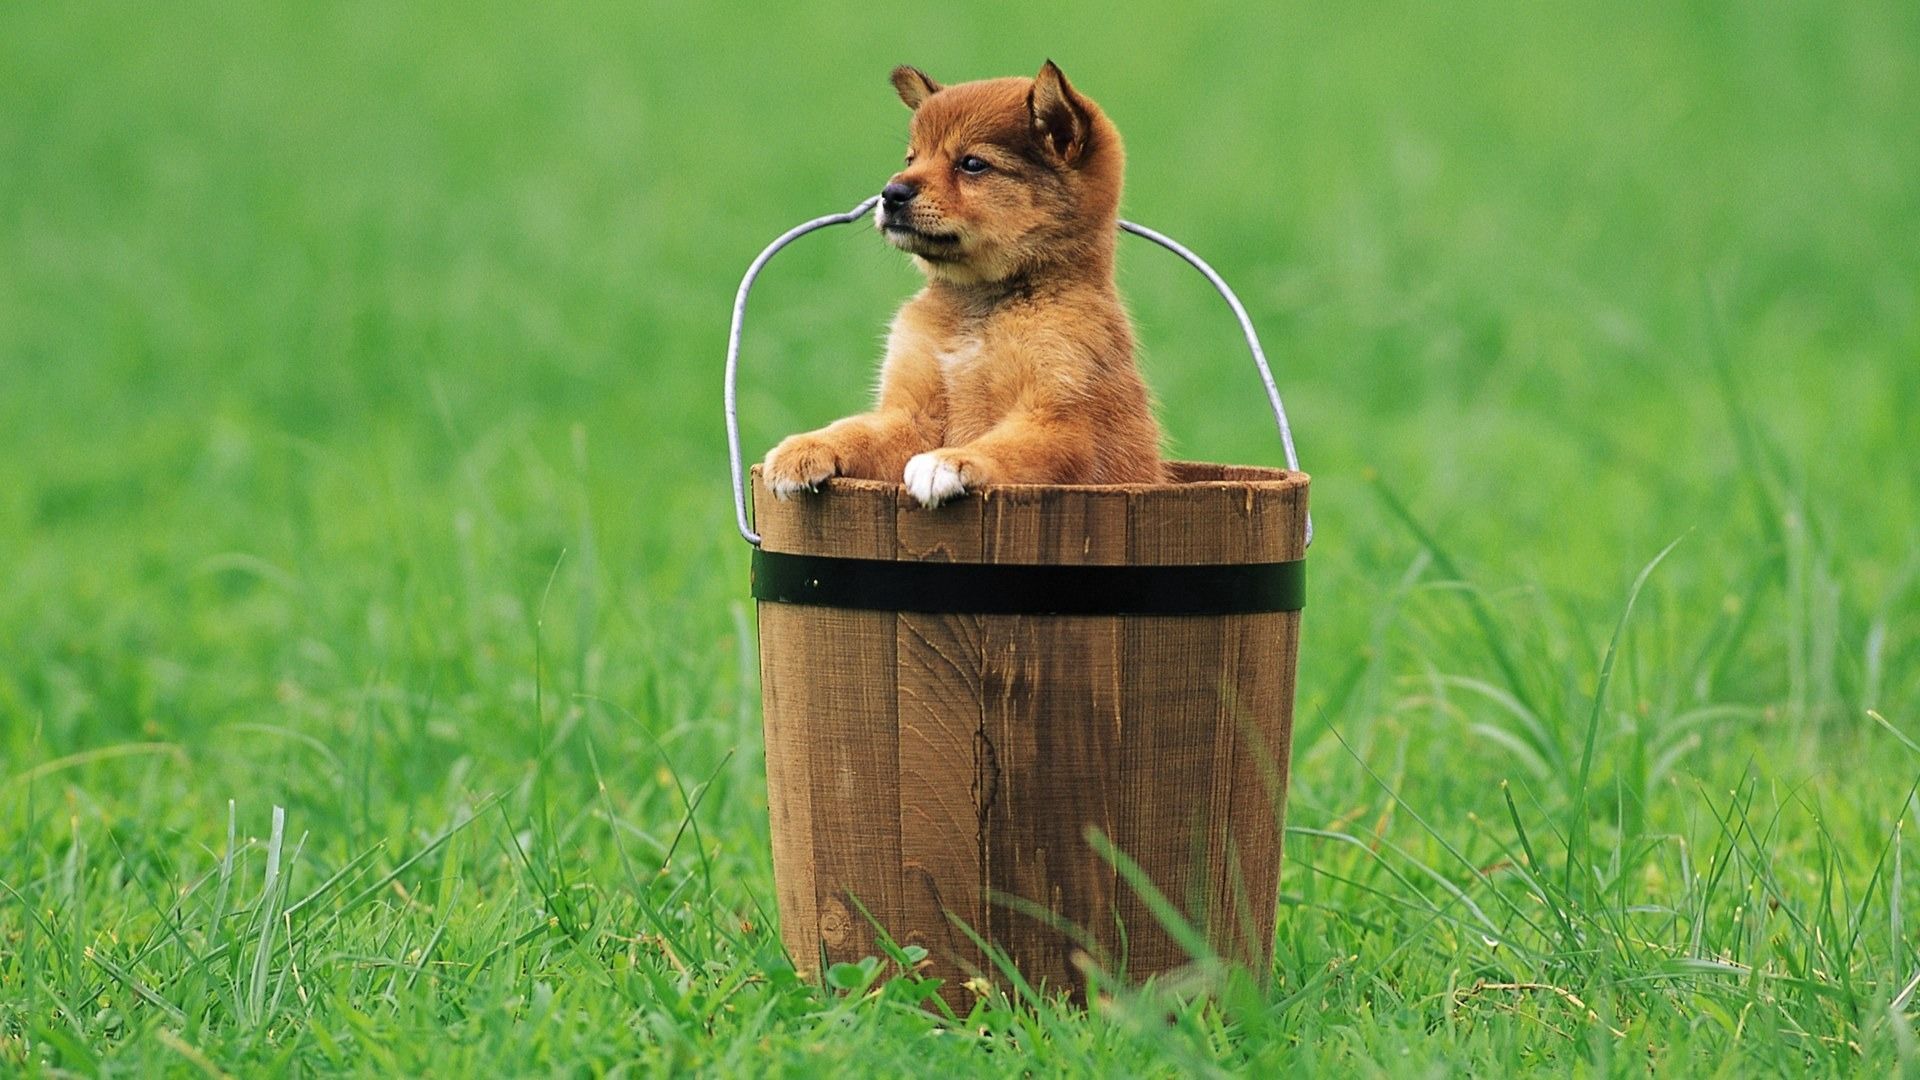 animals, grass, sit, puppy, expectation, waiting, bucket